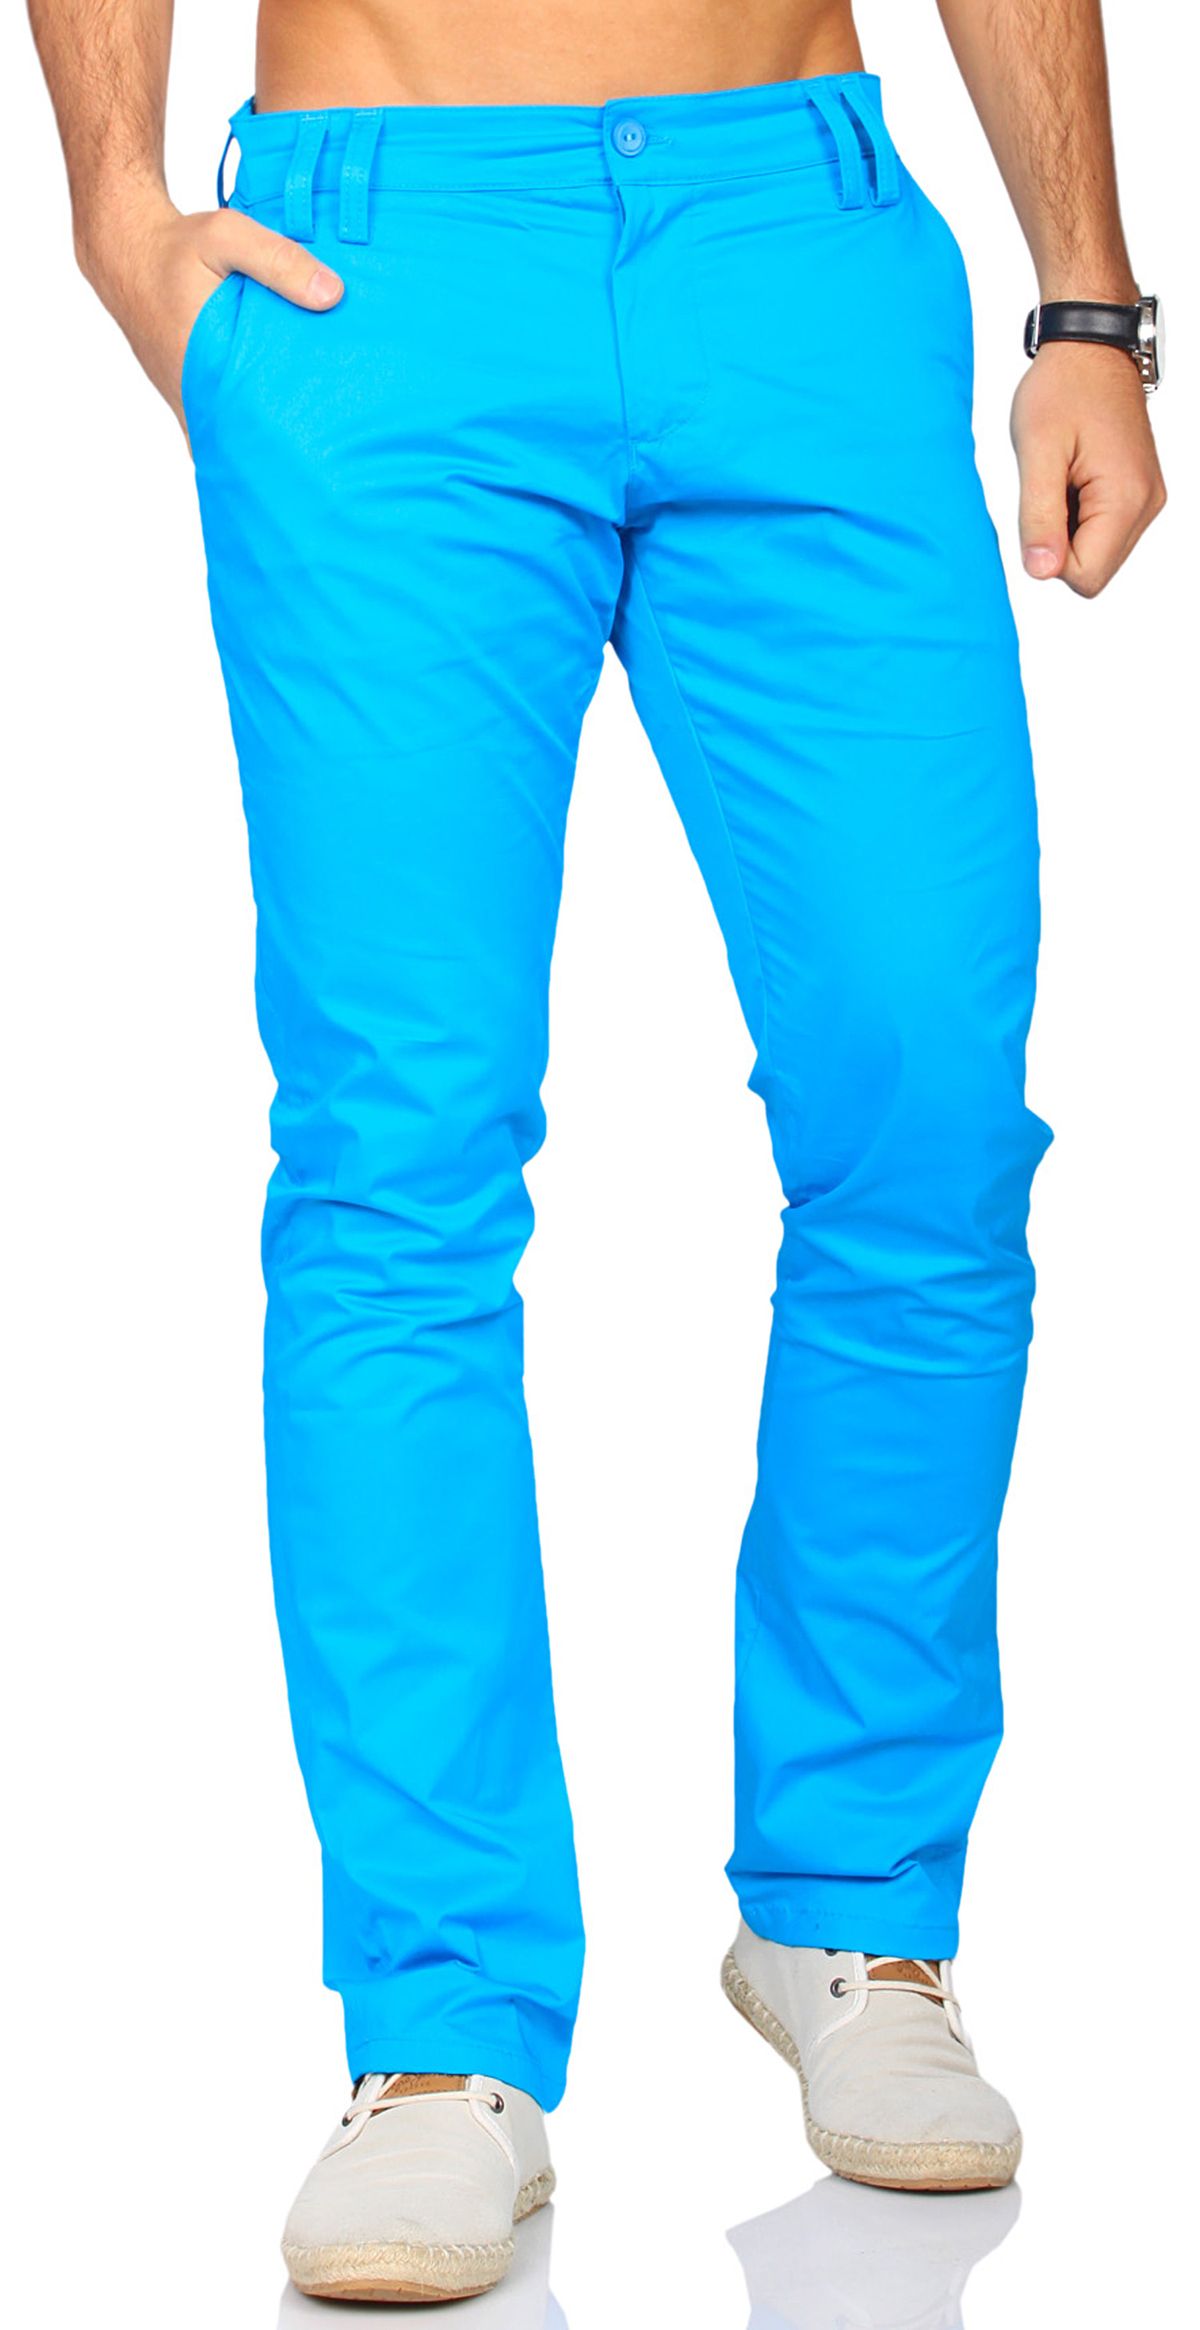 Rerock Herren Chino Hose Pants Slim Fit stretch Sommerhose color blocking  style | eBay